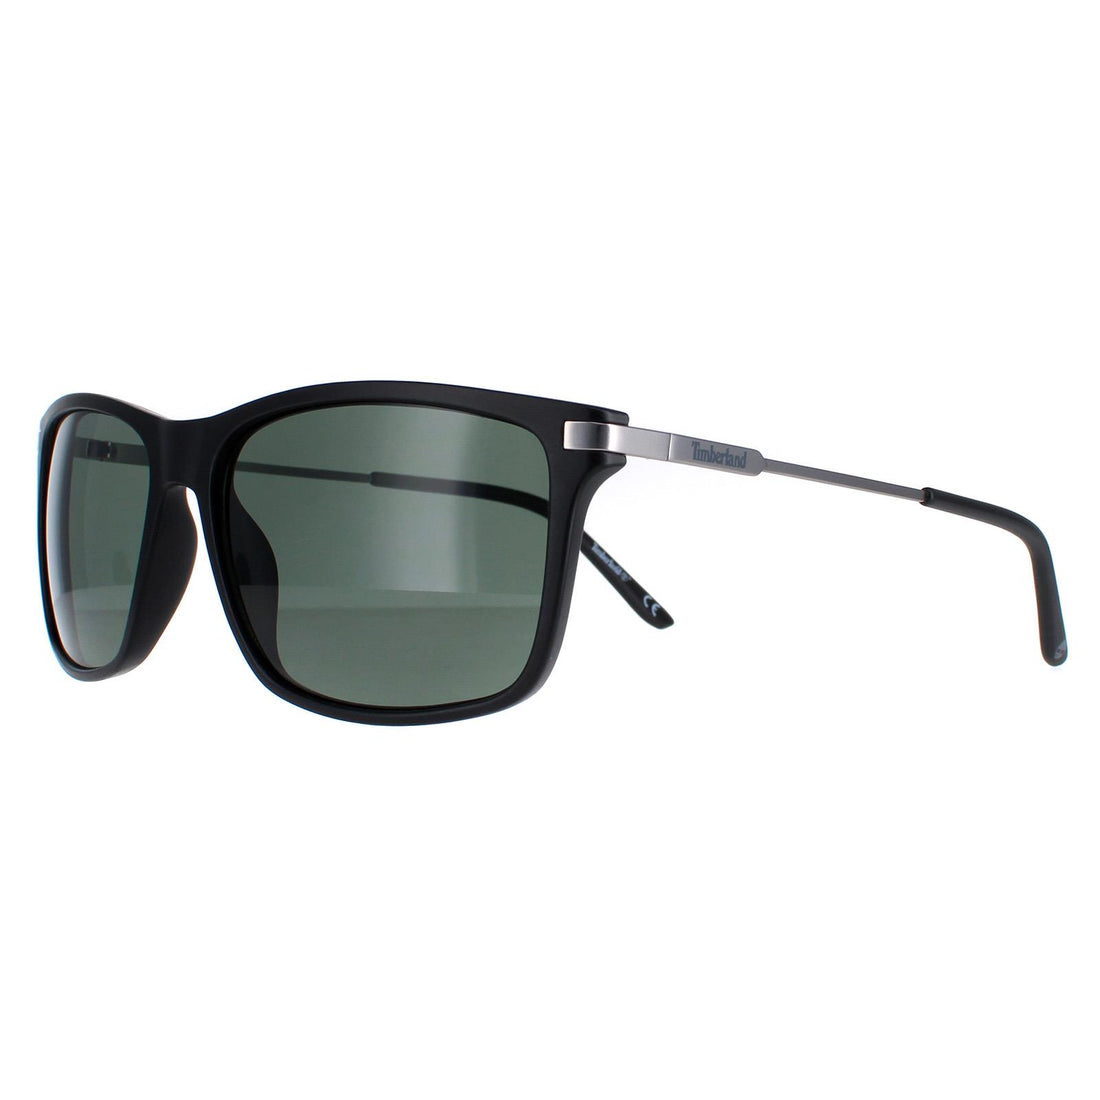 Timberland TB7177 Sunglasses